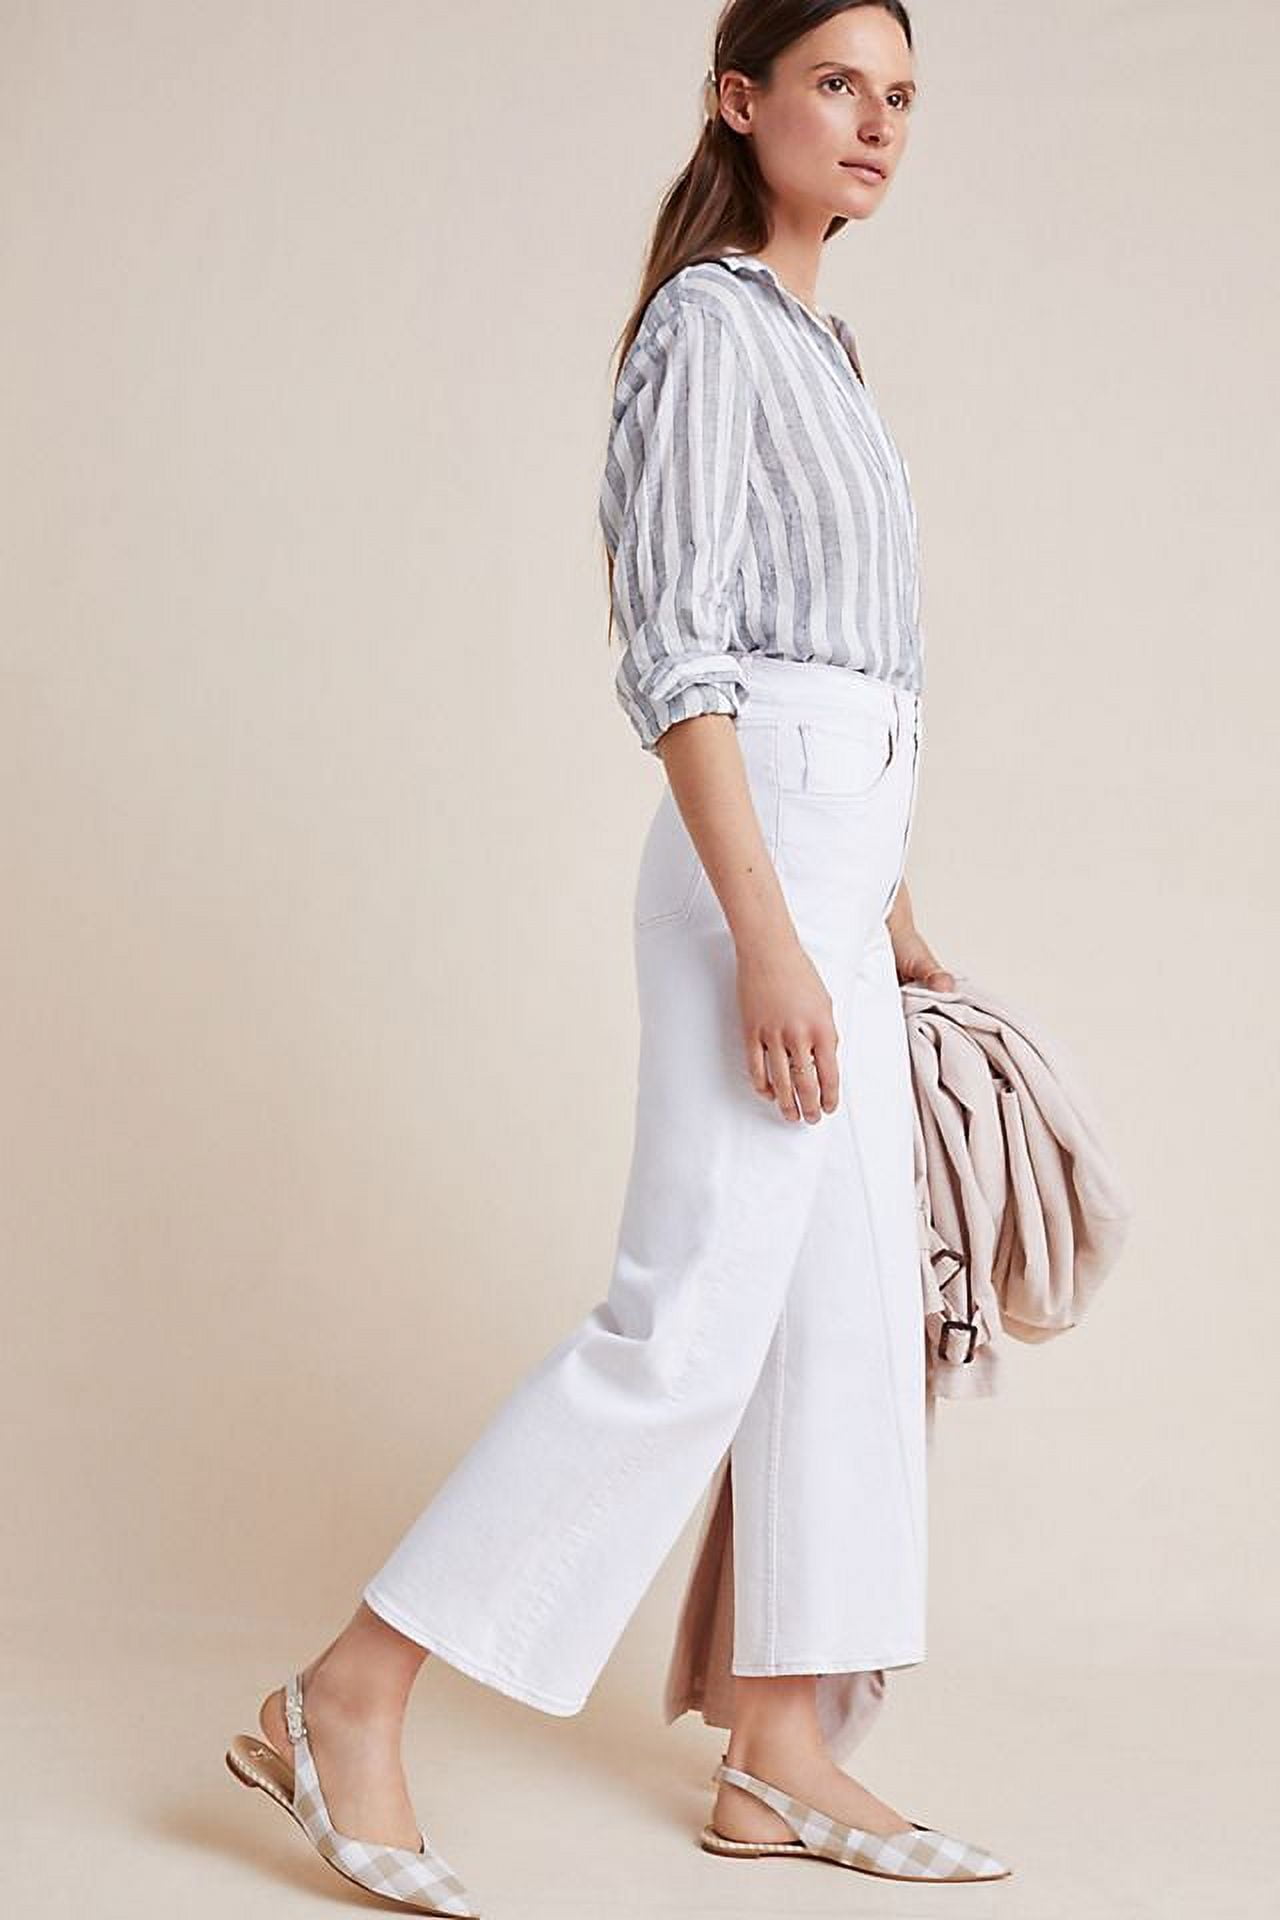 White wide legged cropped jeans @whatjosiedidnext